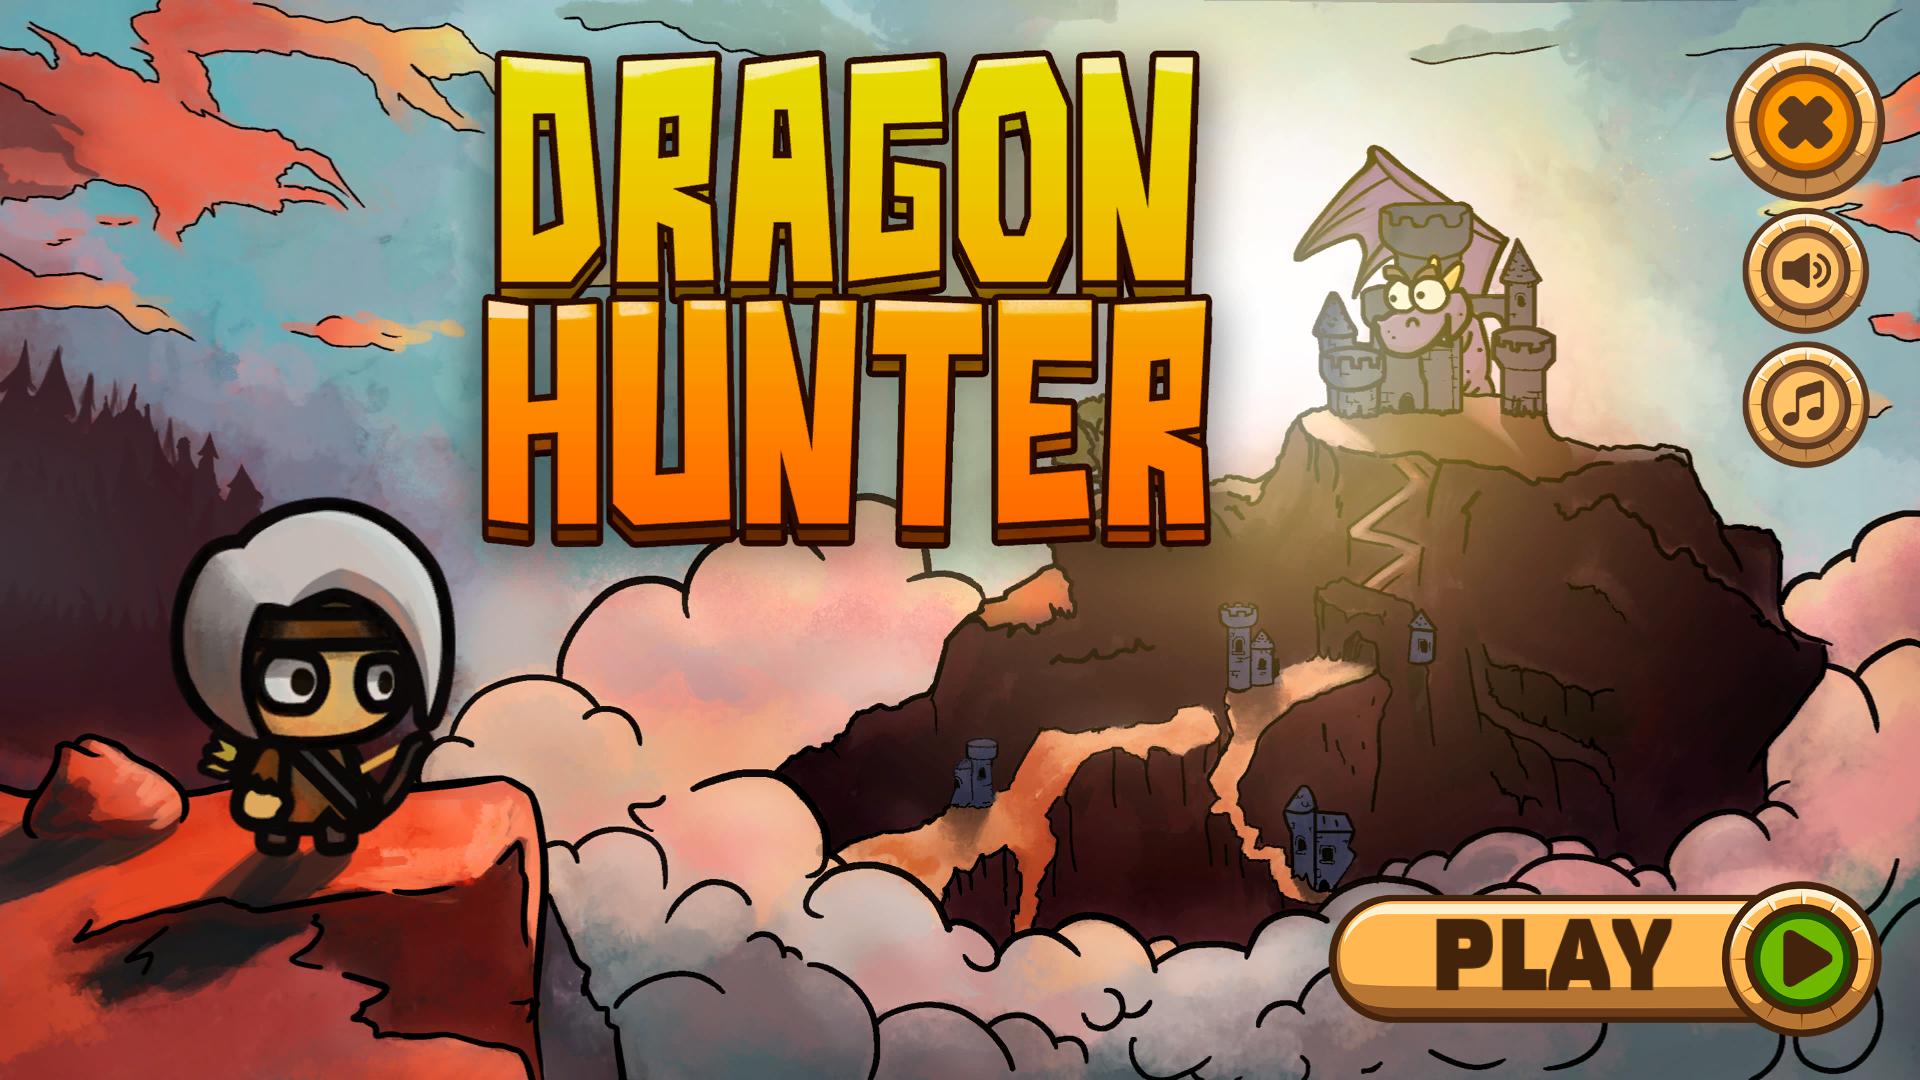 [$ 0.52] Dragon Hunter Steam CD Key